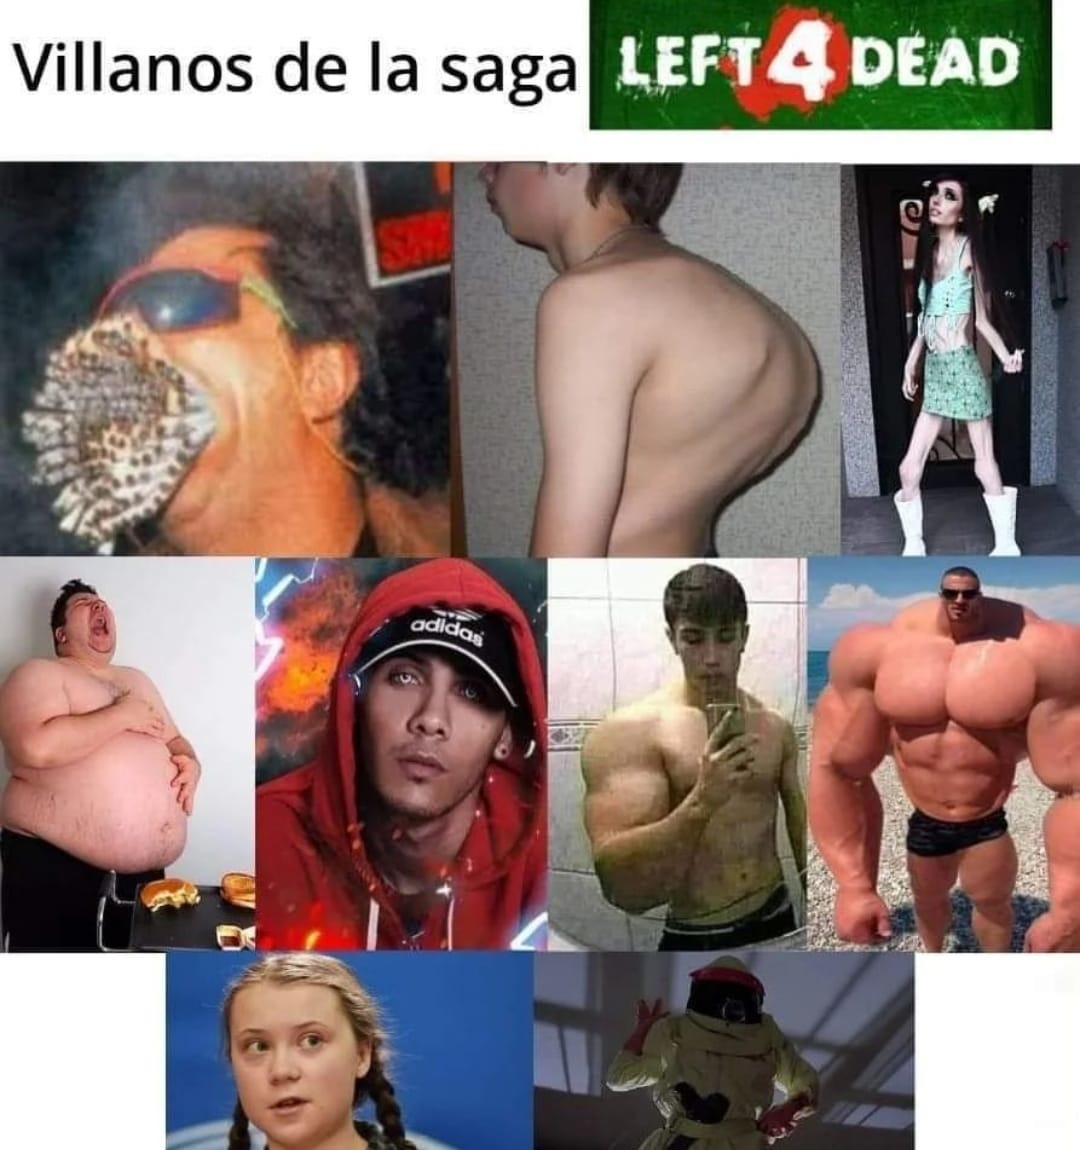 Villanos de left 4 dead - meme